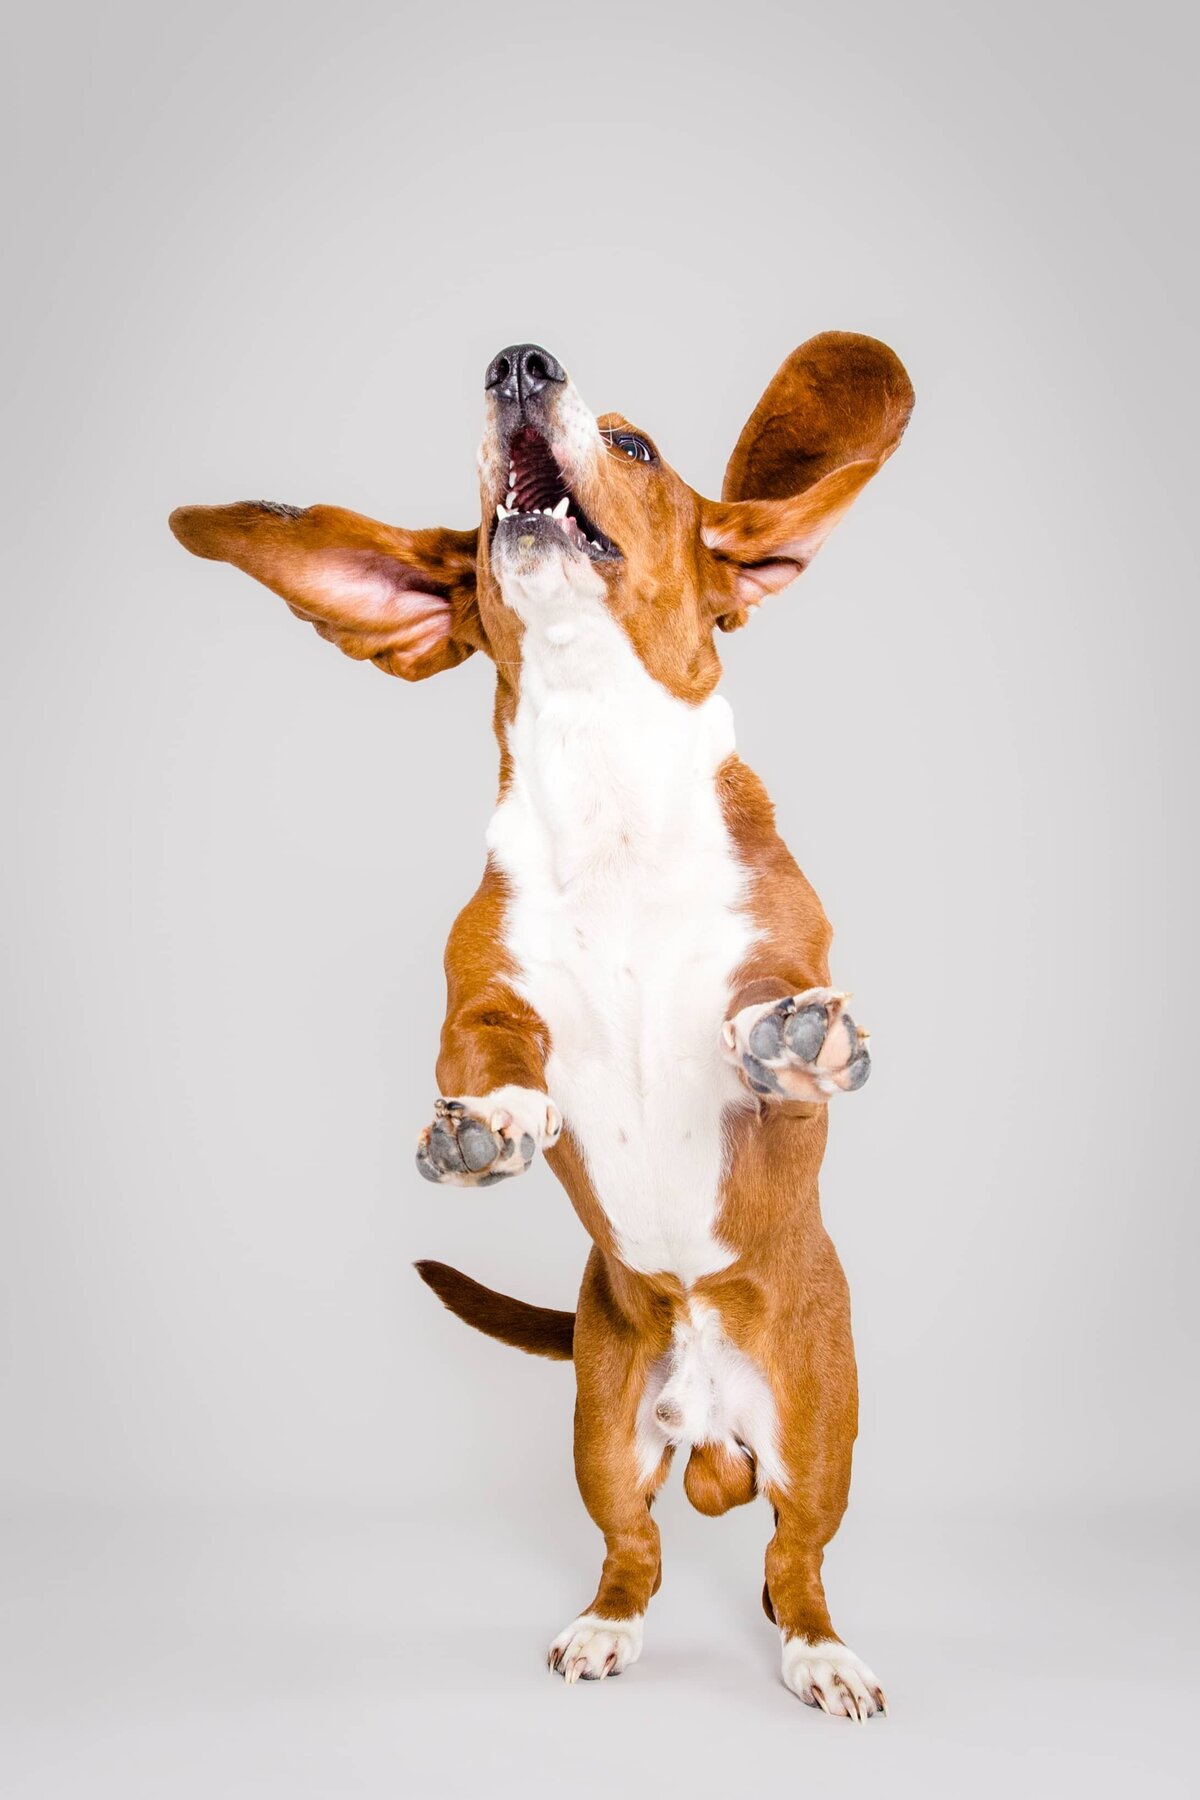 The Beloved Pup Photo Studio - South Eastern & Alabama Dog Photographer Portfolio 13